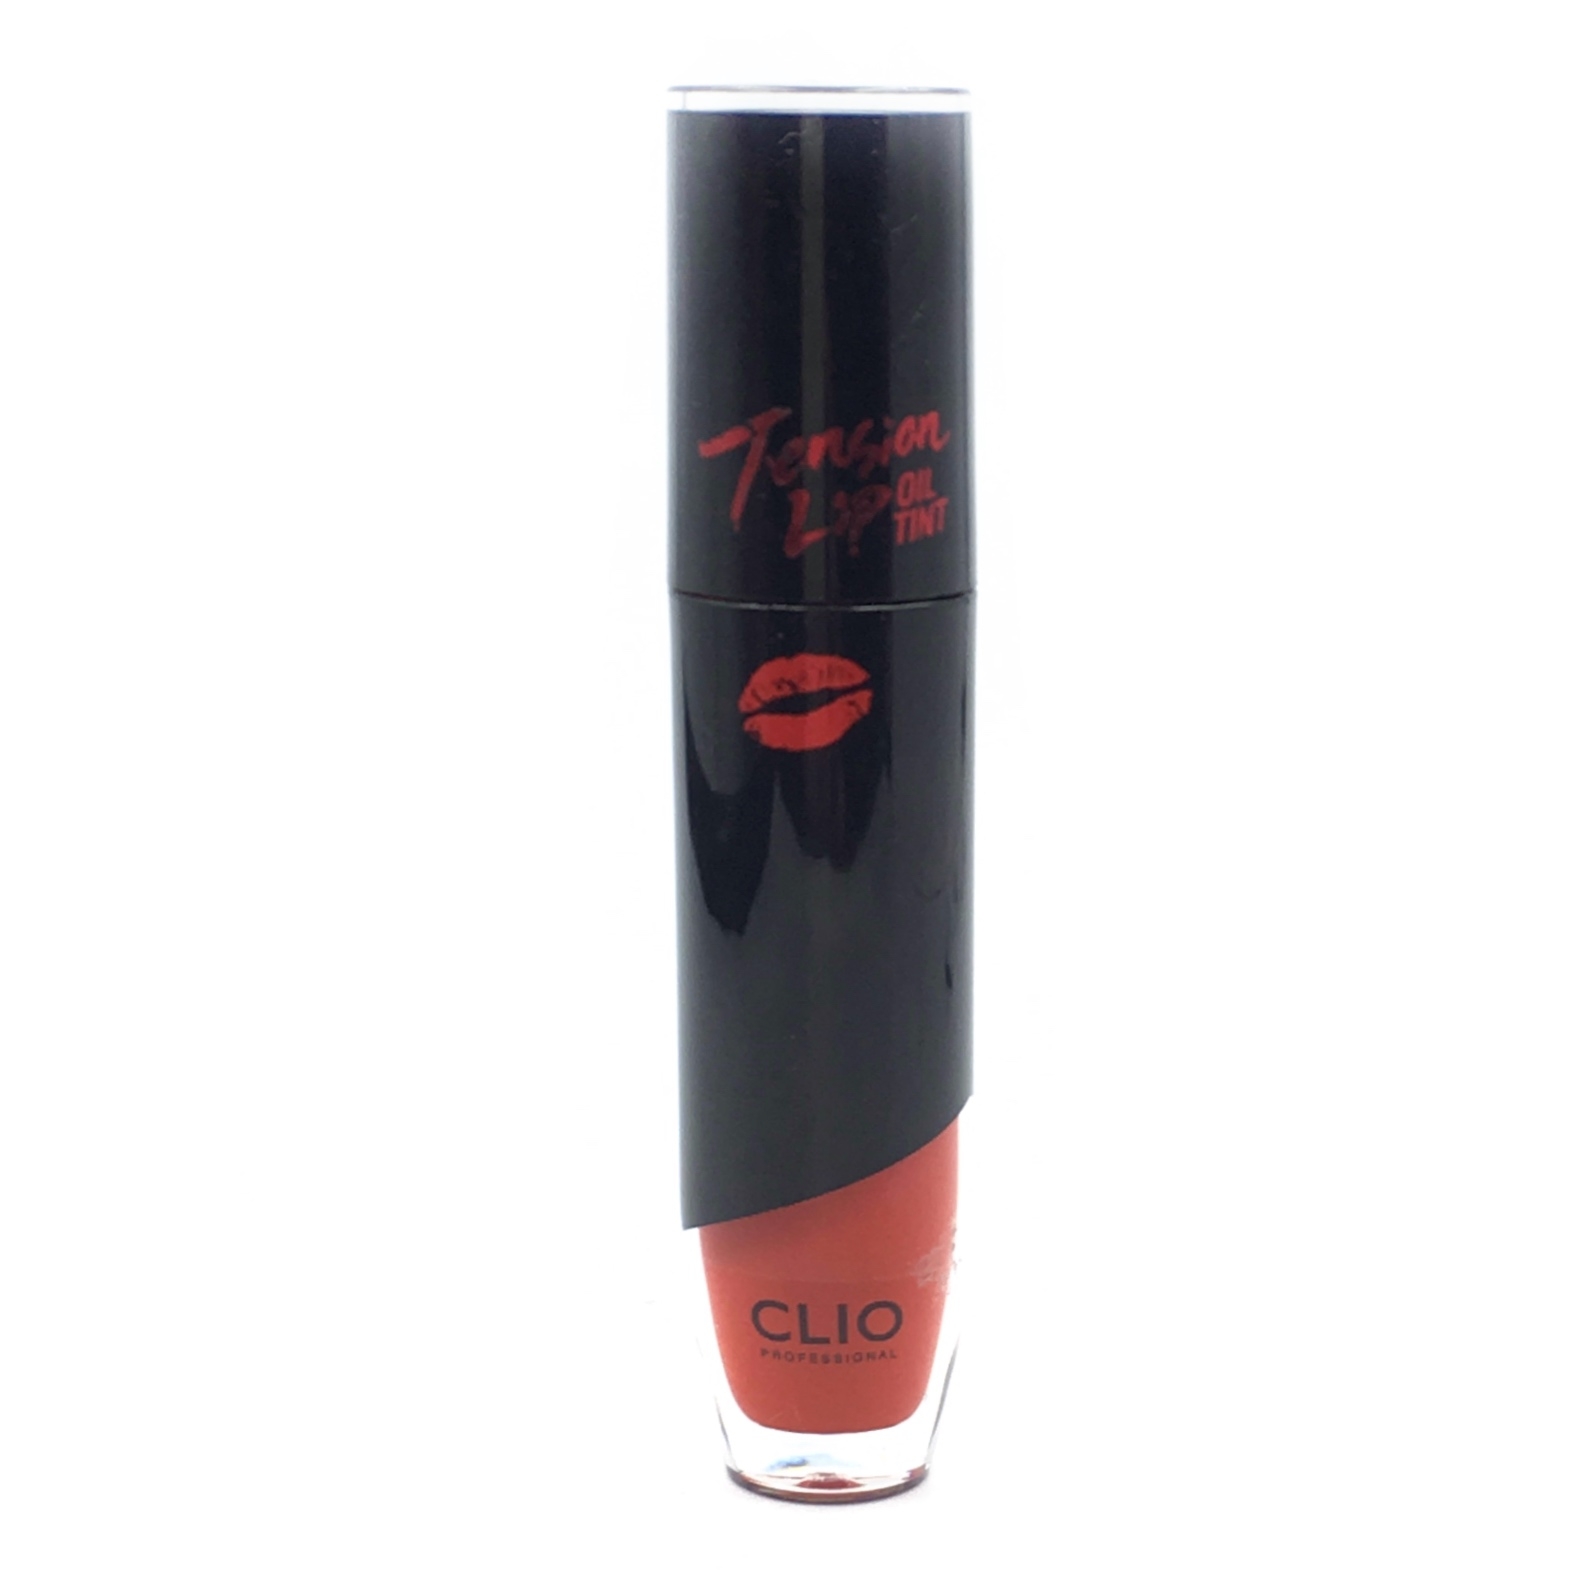 Clio Wild Cherry Tension Lip Oil Tint Lips